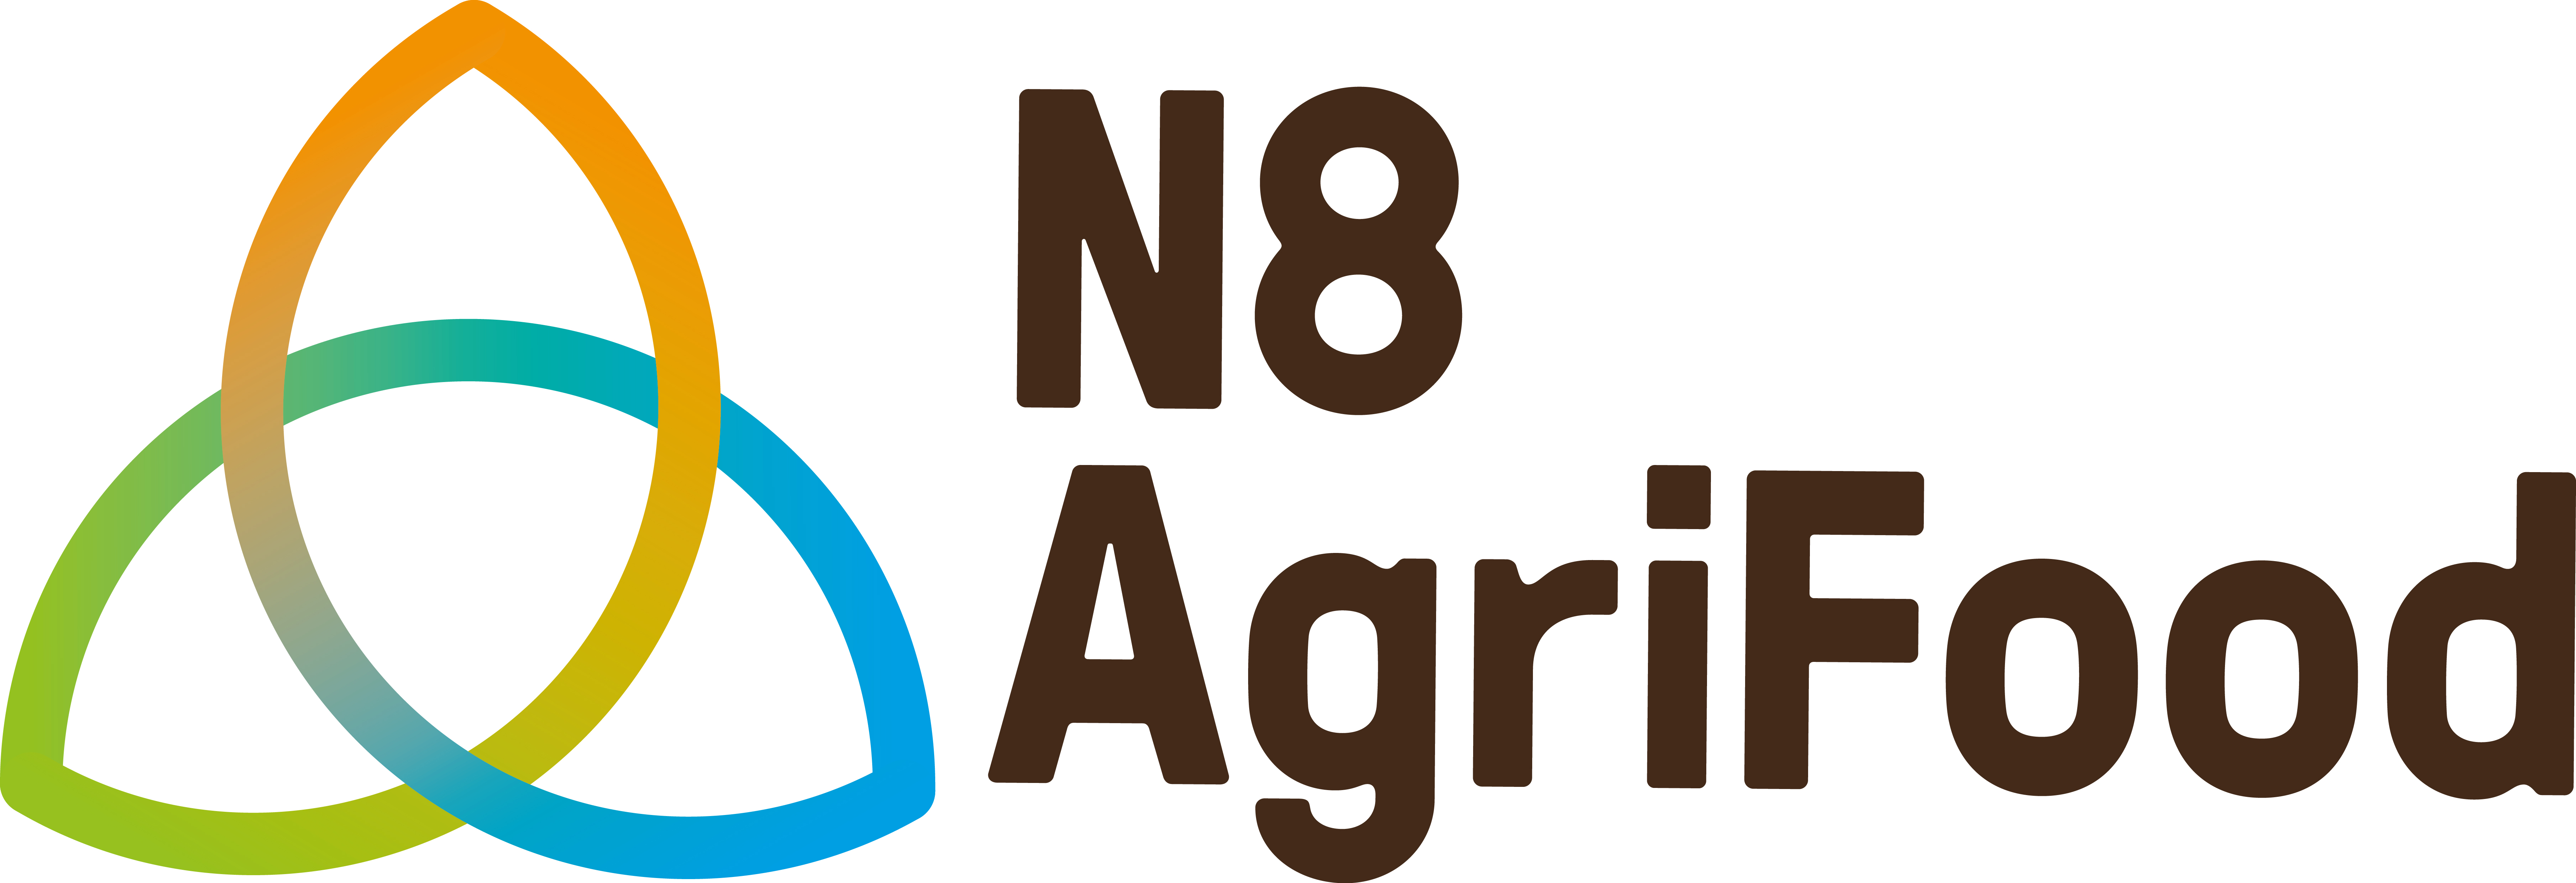 Agrifood logo